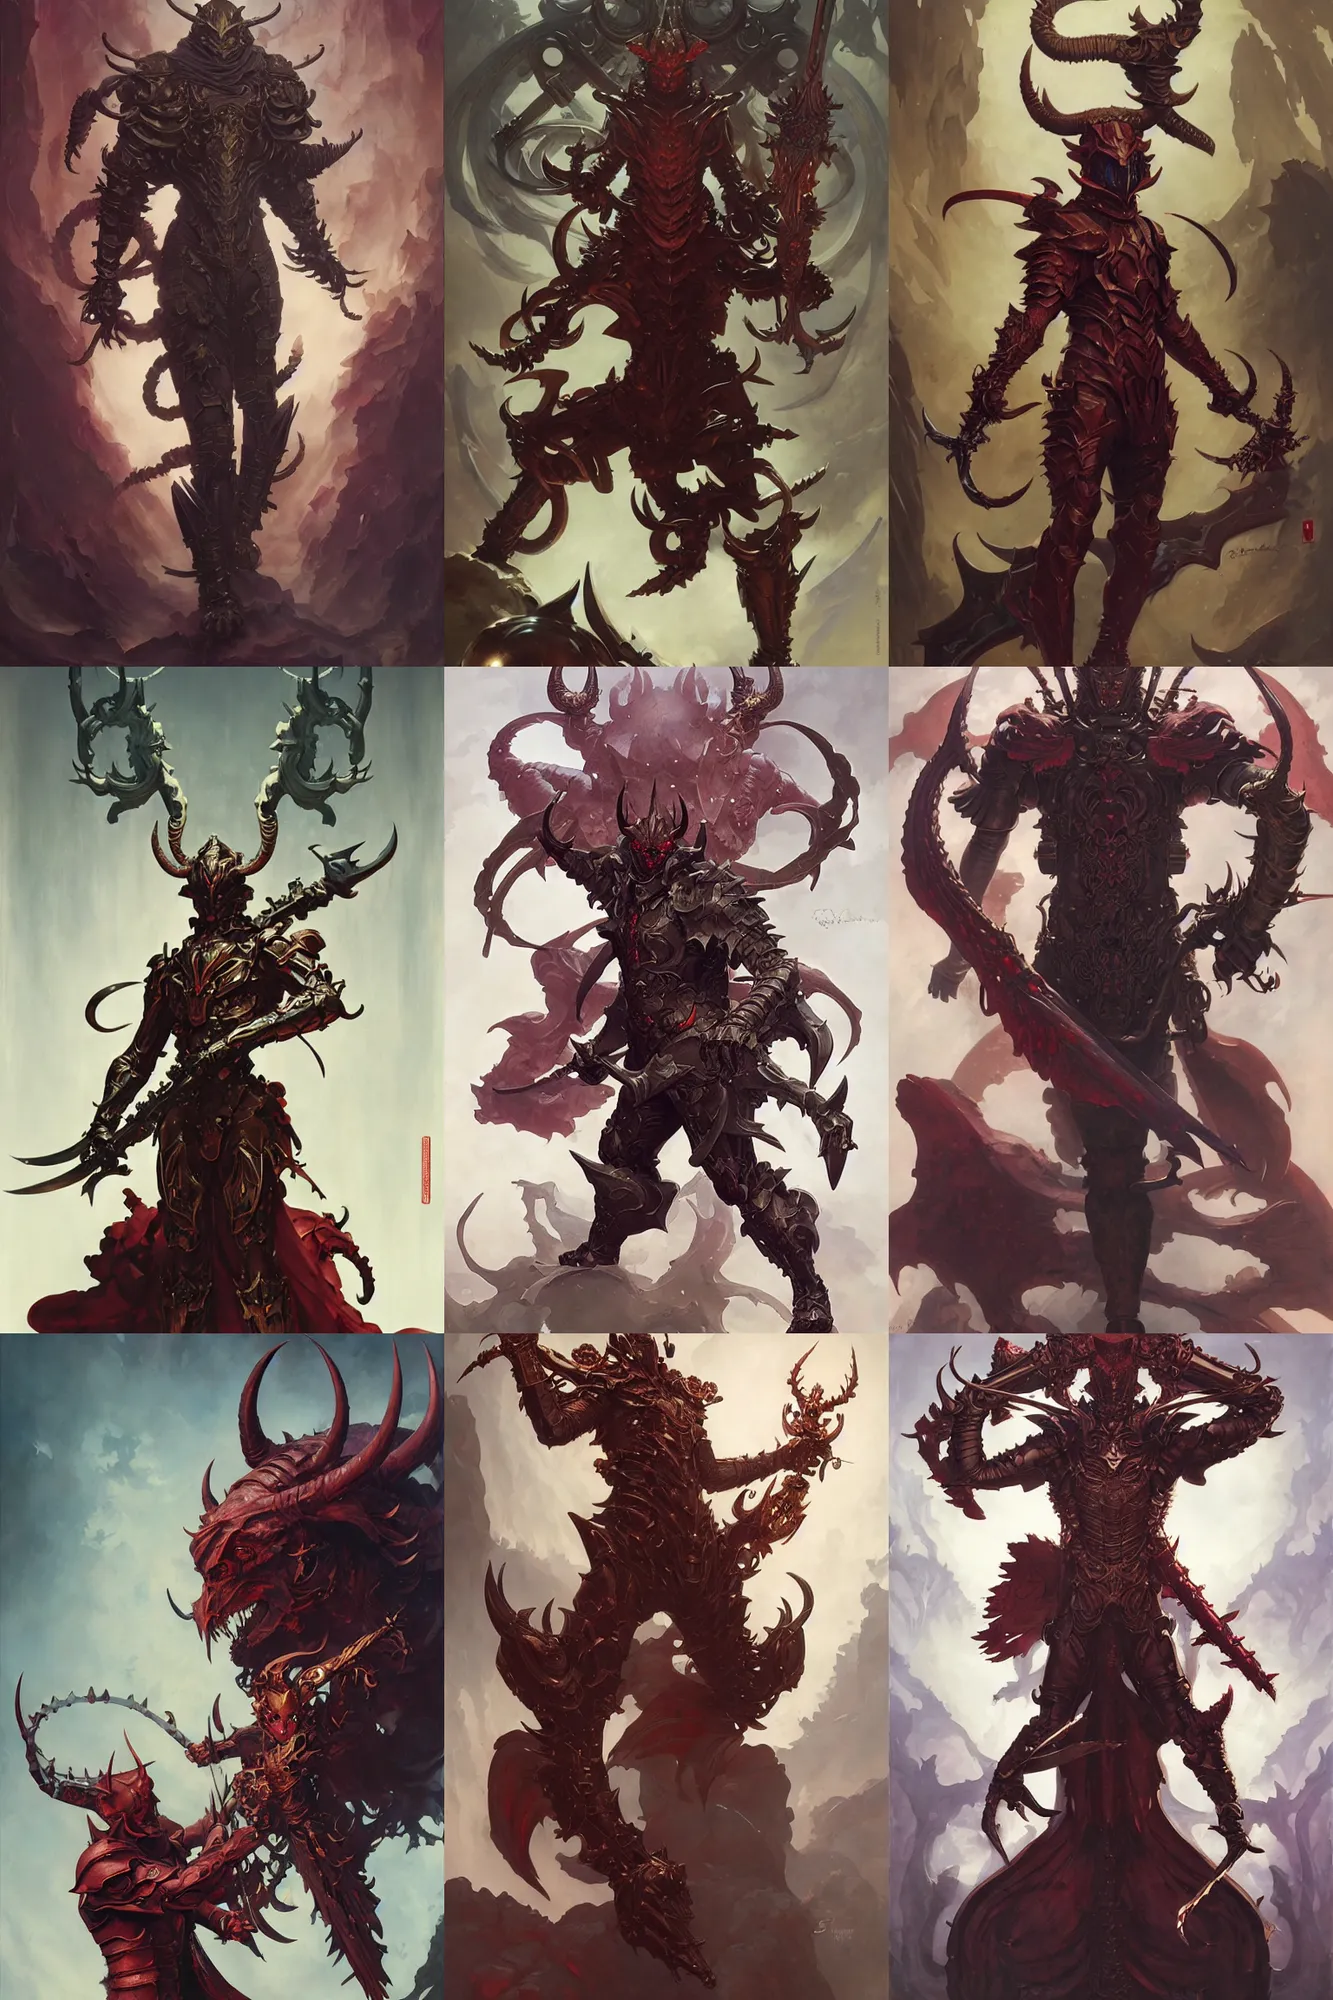 Prompt: male devil full body armor with claws, fantasy, art by joseph leyendecker, peter mohrbacher, ruan jia, marc simonetti, ayami kojima, cedric peyravernay, victo ngai